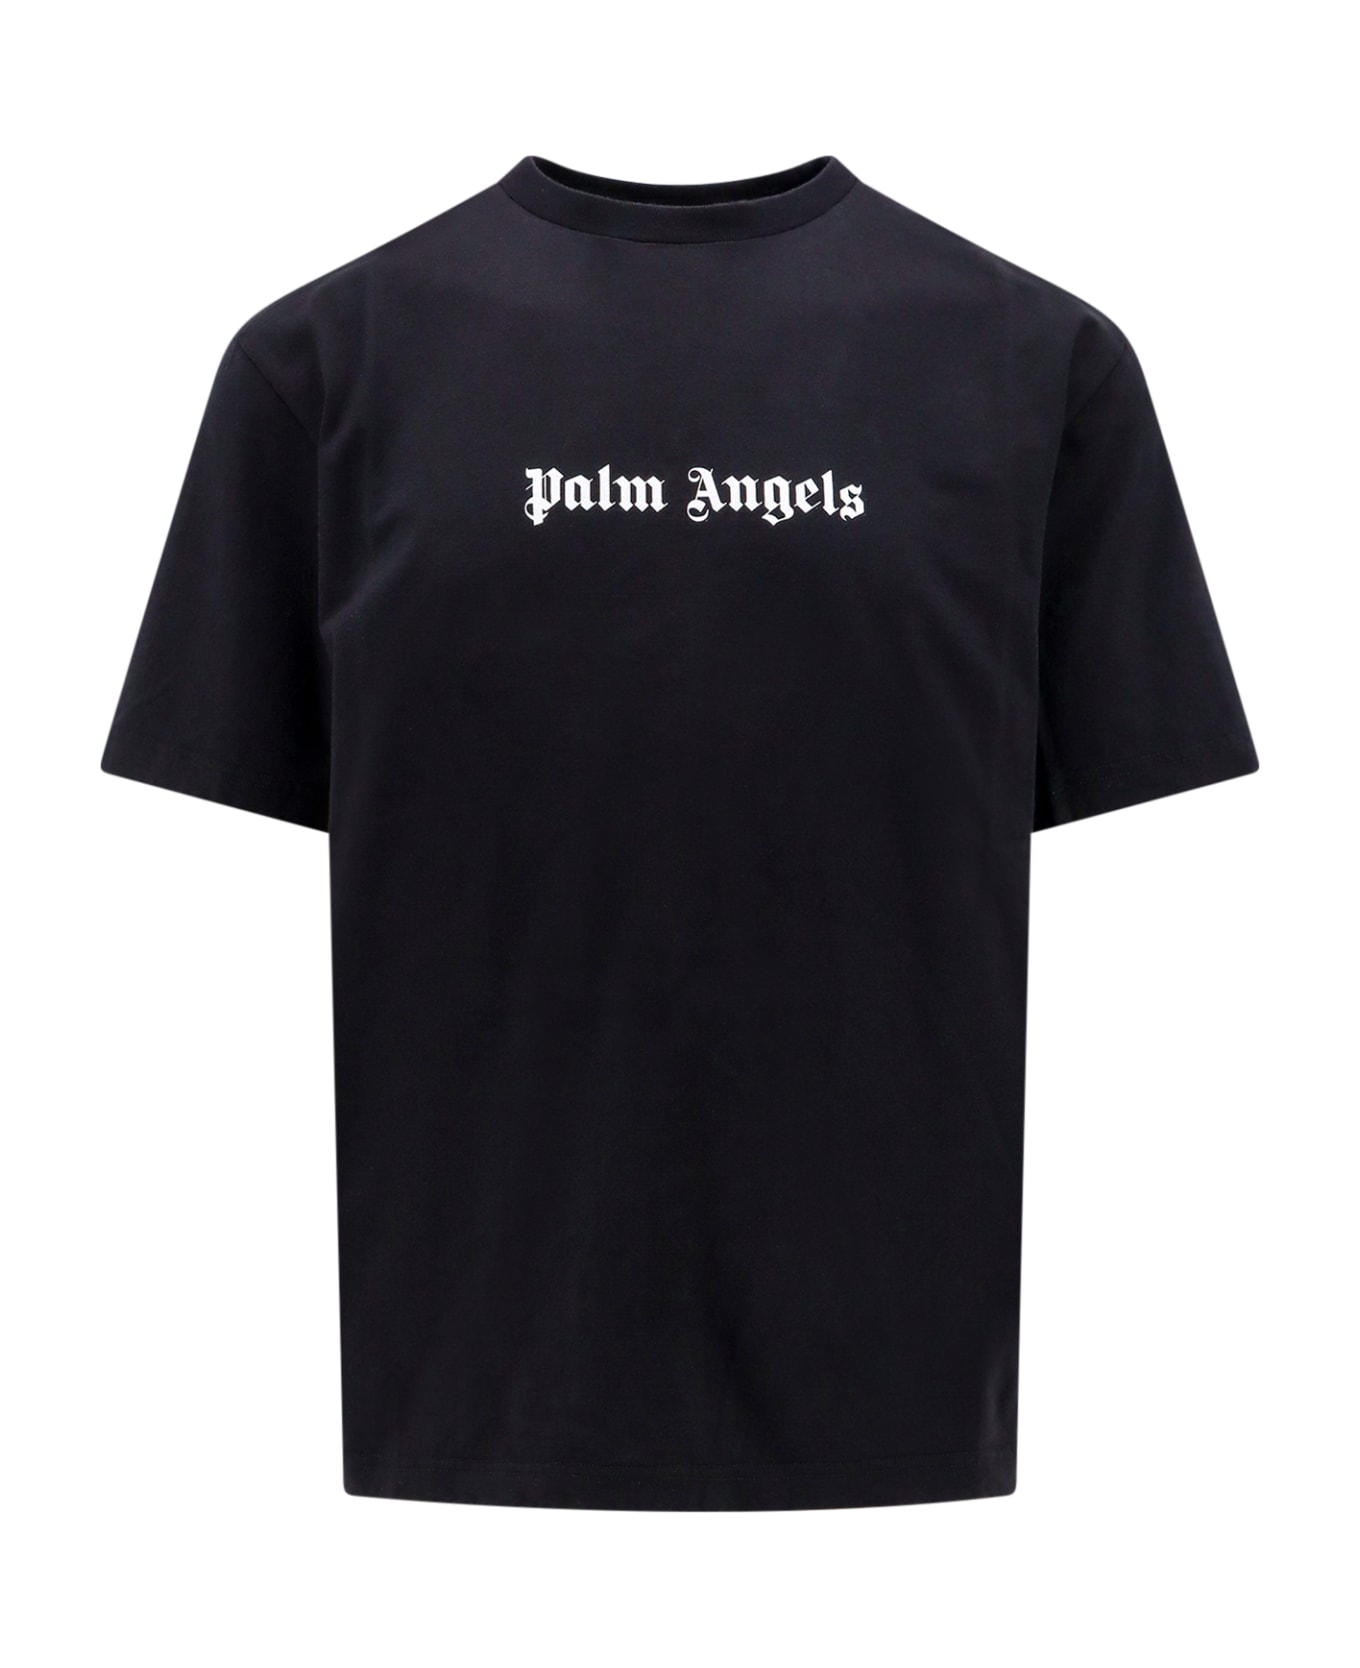 Palm Angels T-shirt - Nero/bianco